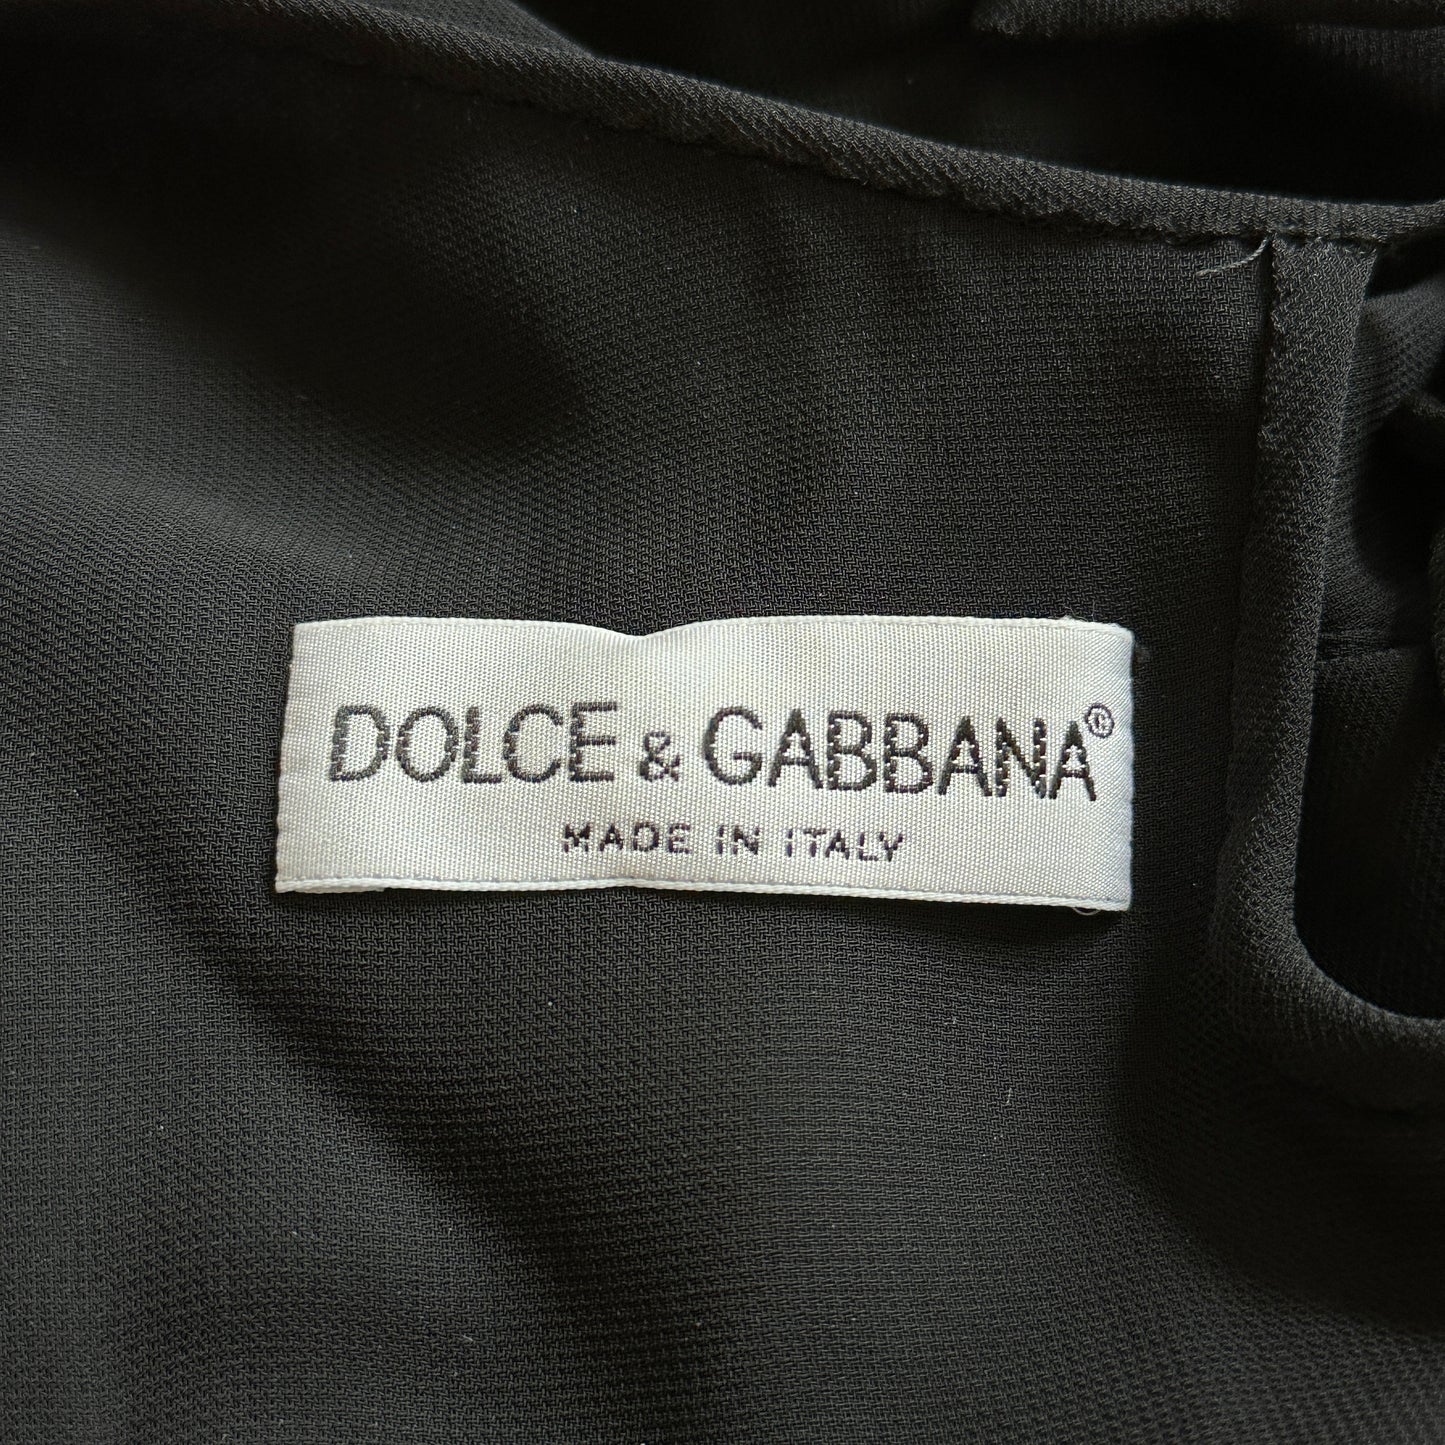 Dolce & Gabbana Chiffon Tie Up Dress